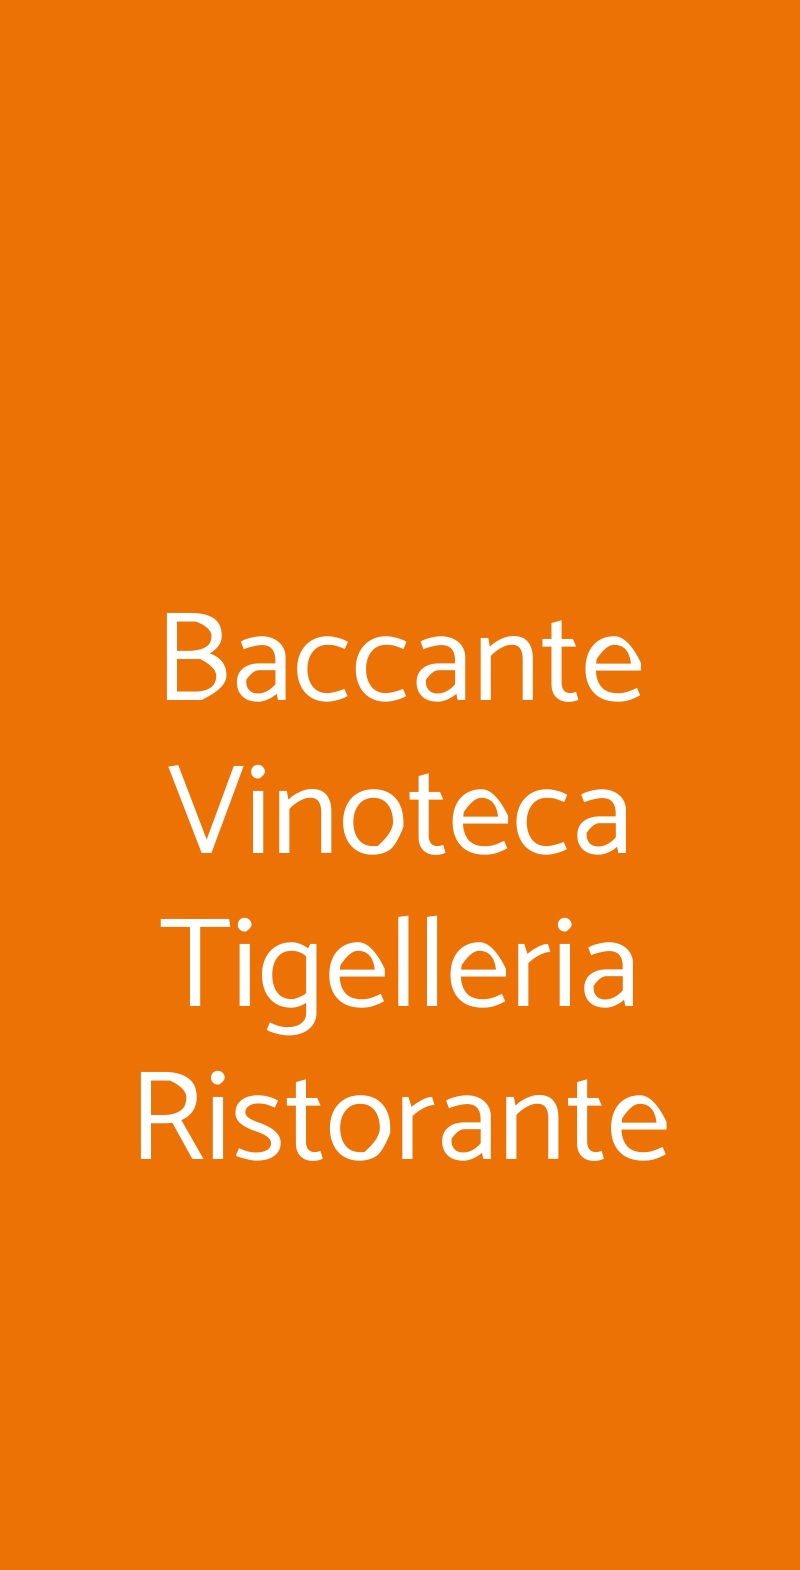 Baccante Vinoteca Tigelleria Ristorante Bologna menù 1 pagina